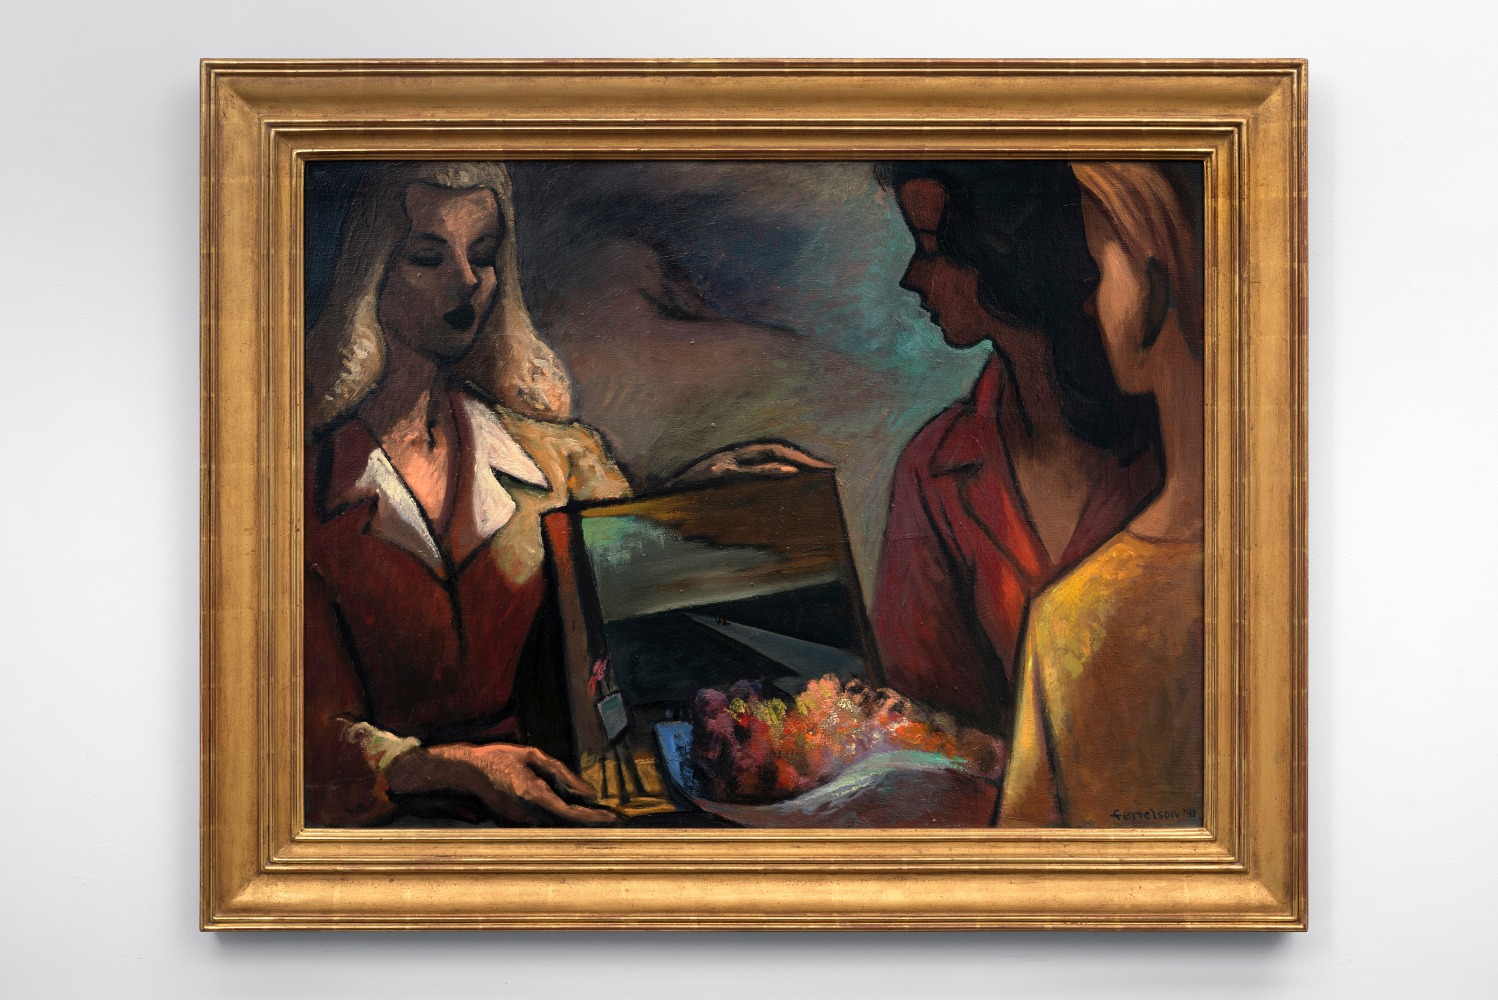 Lorser Feitelson (1898-1978)&amp;nbsp;
Three Girls, 1943
oil on canvas
30 x 40 inches; 76.2 x 101.6 centimeters
LSFA# 00058